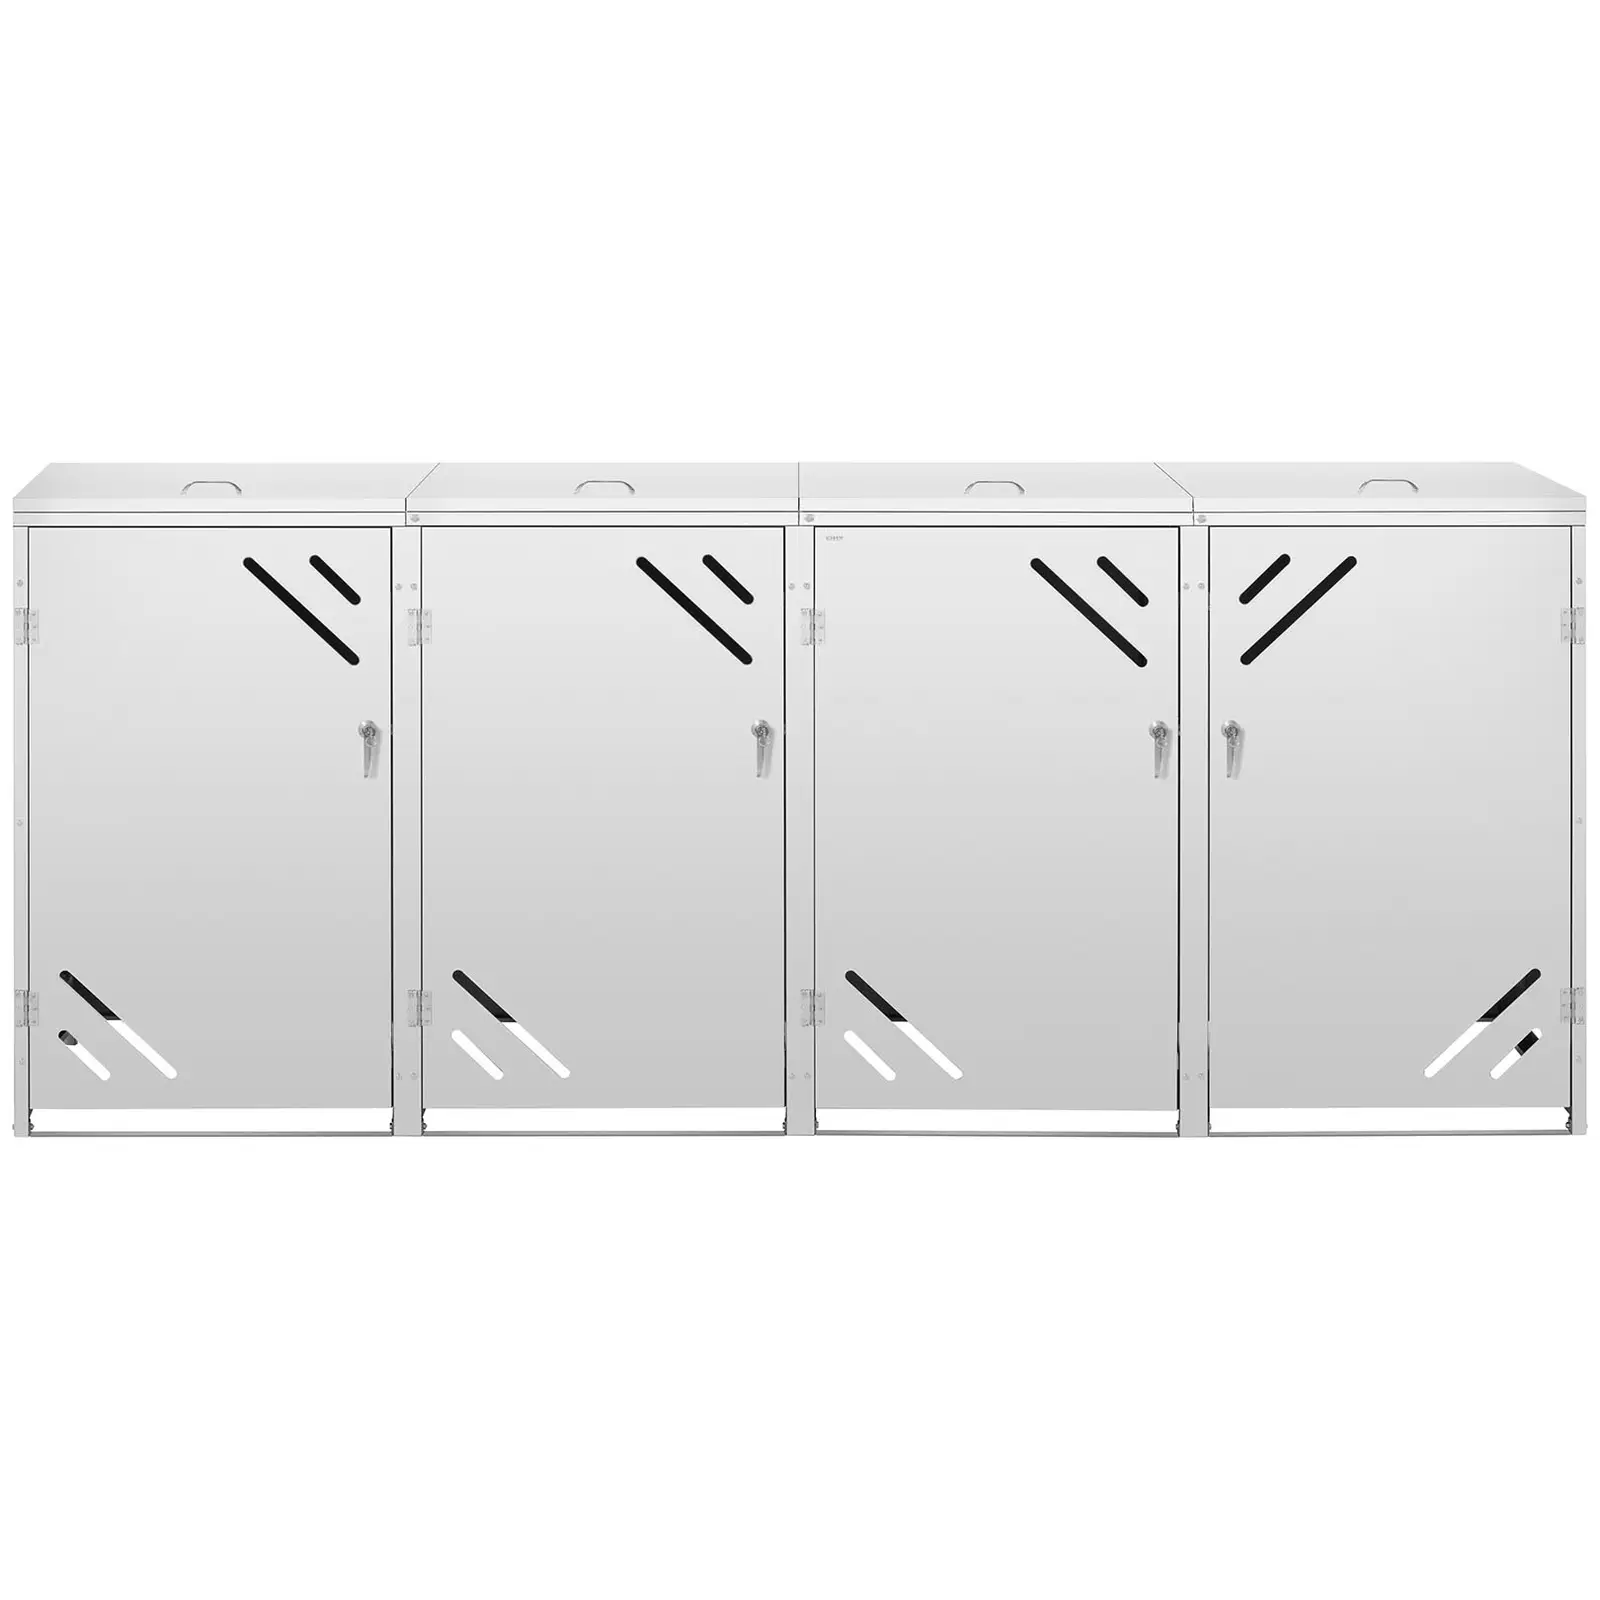 Bin Storage Box - 4 x 240 L - diagonal air slots